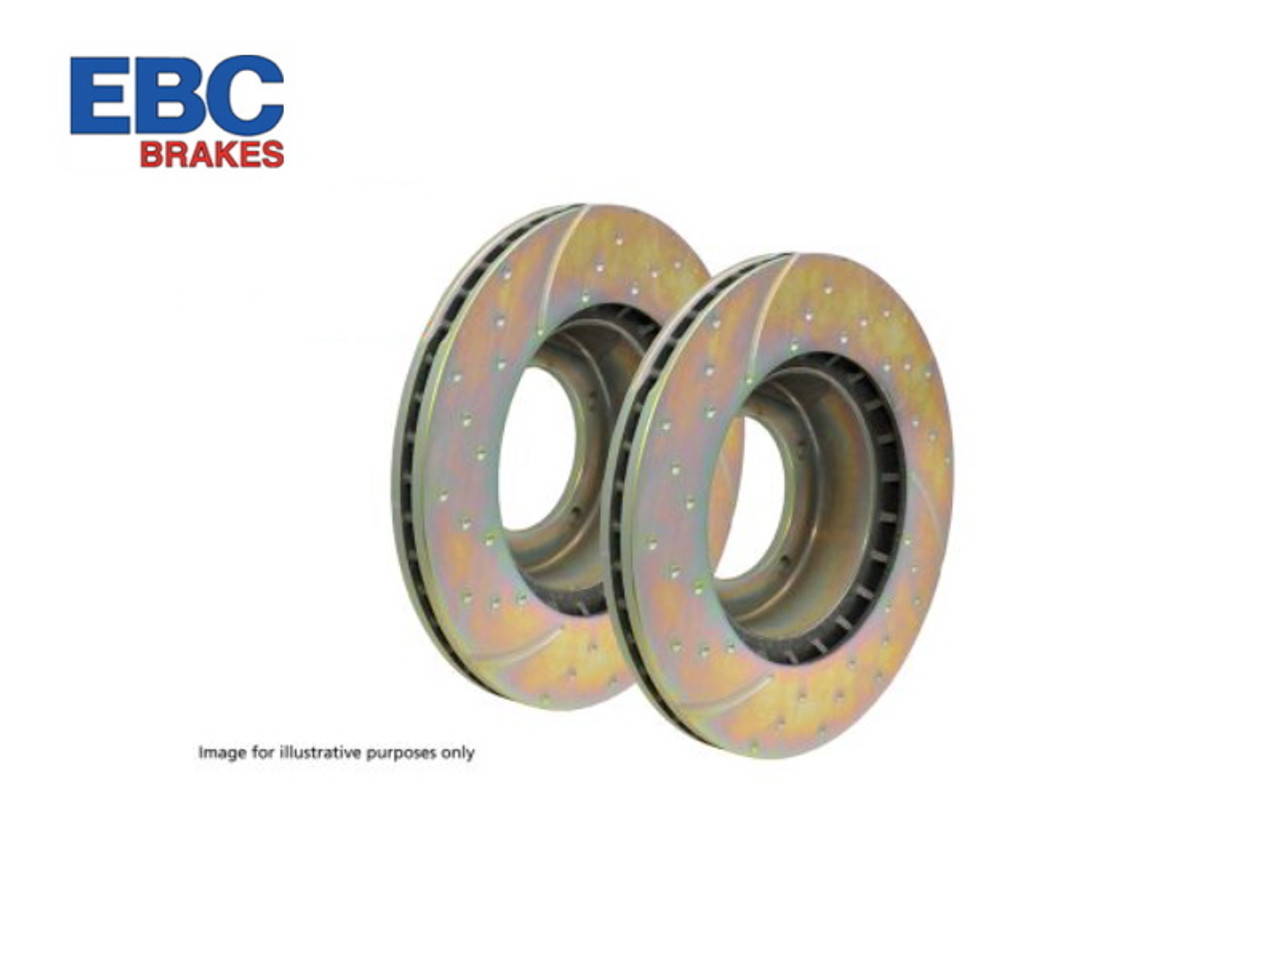 EBC Performance Rear Brake Discs Upto 2006 (SDB000211)